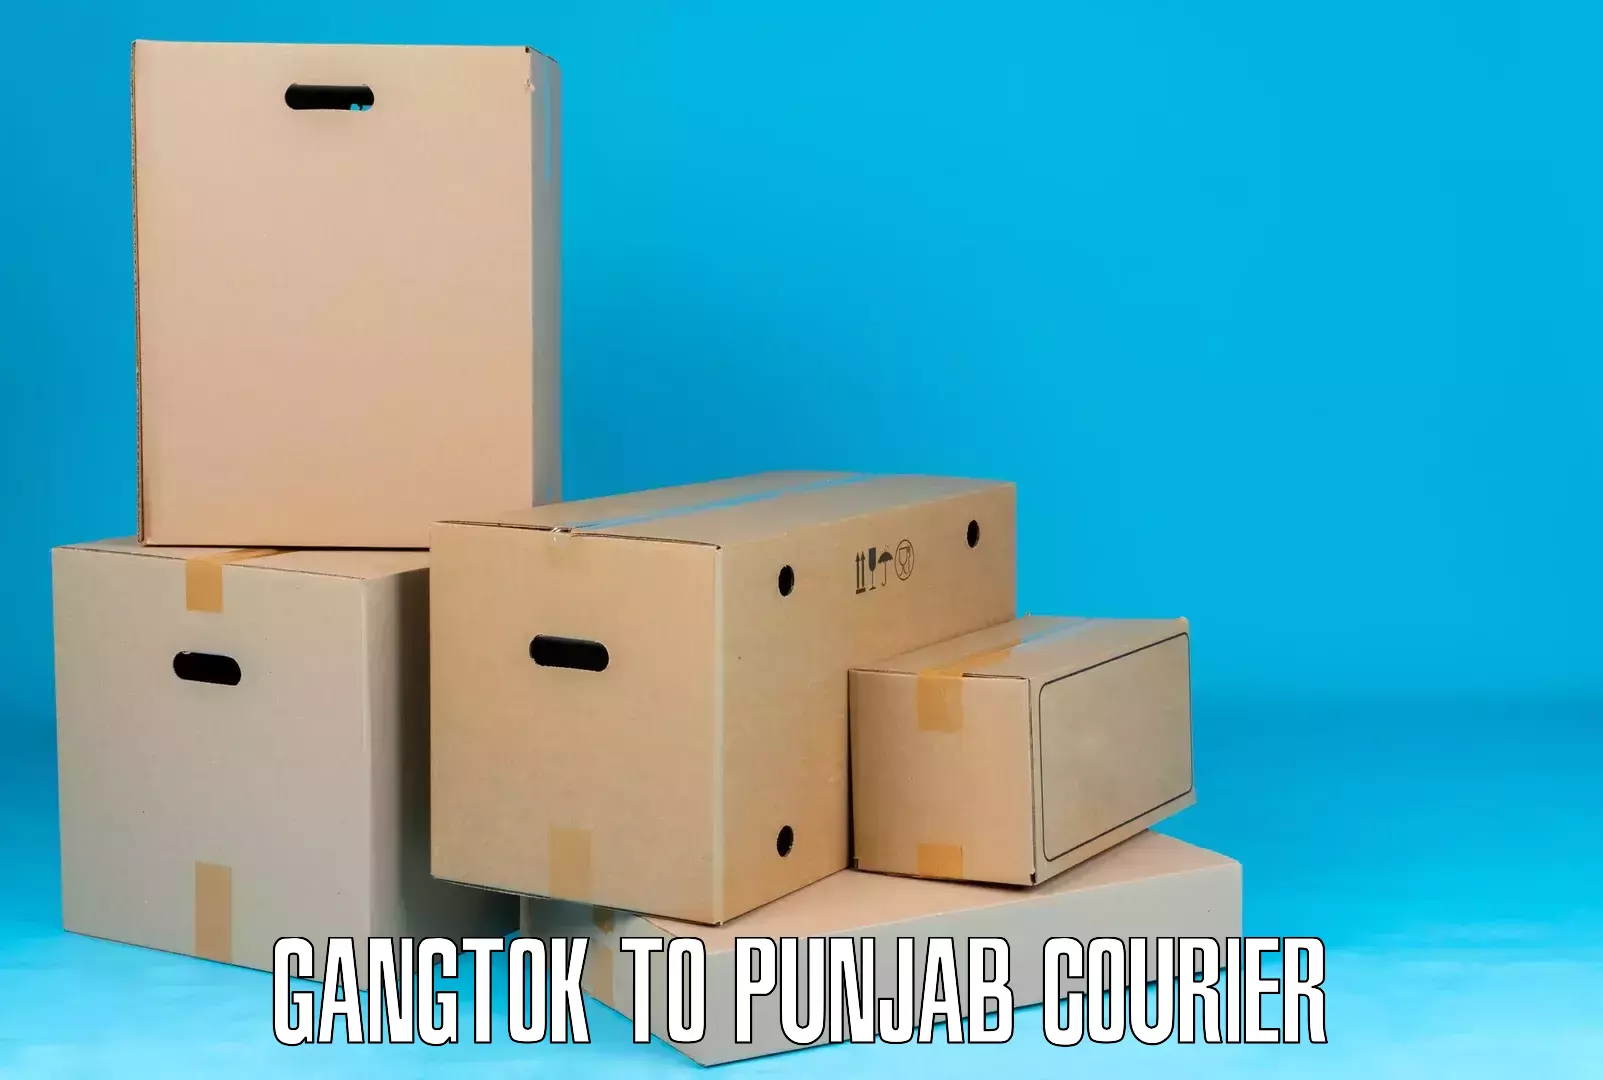 Affordable parcel service Gangtok to Amritsar